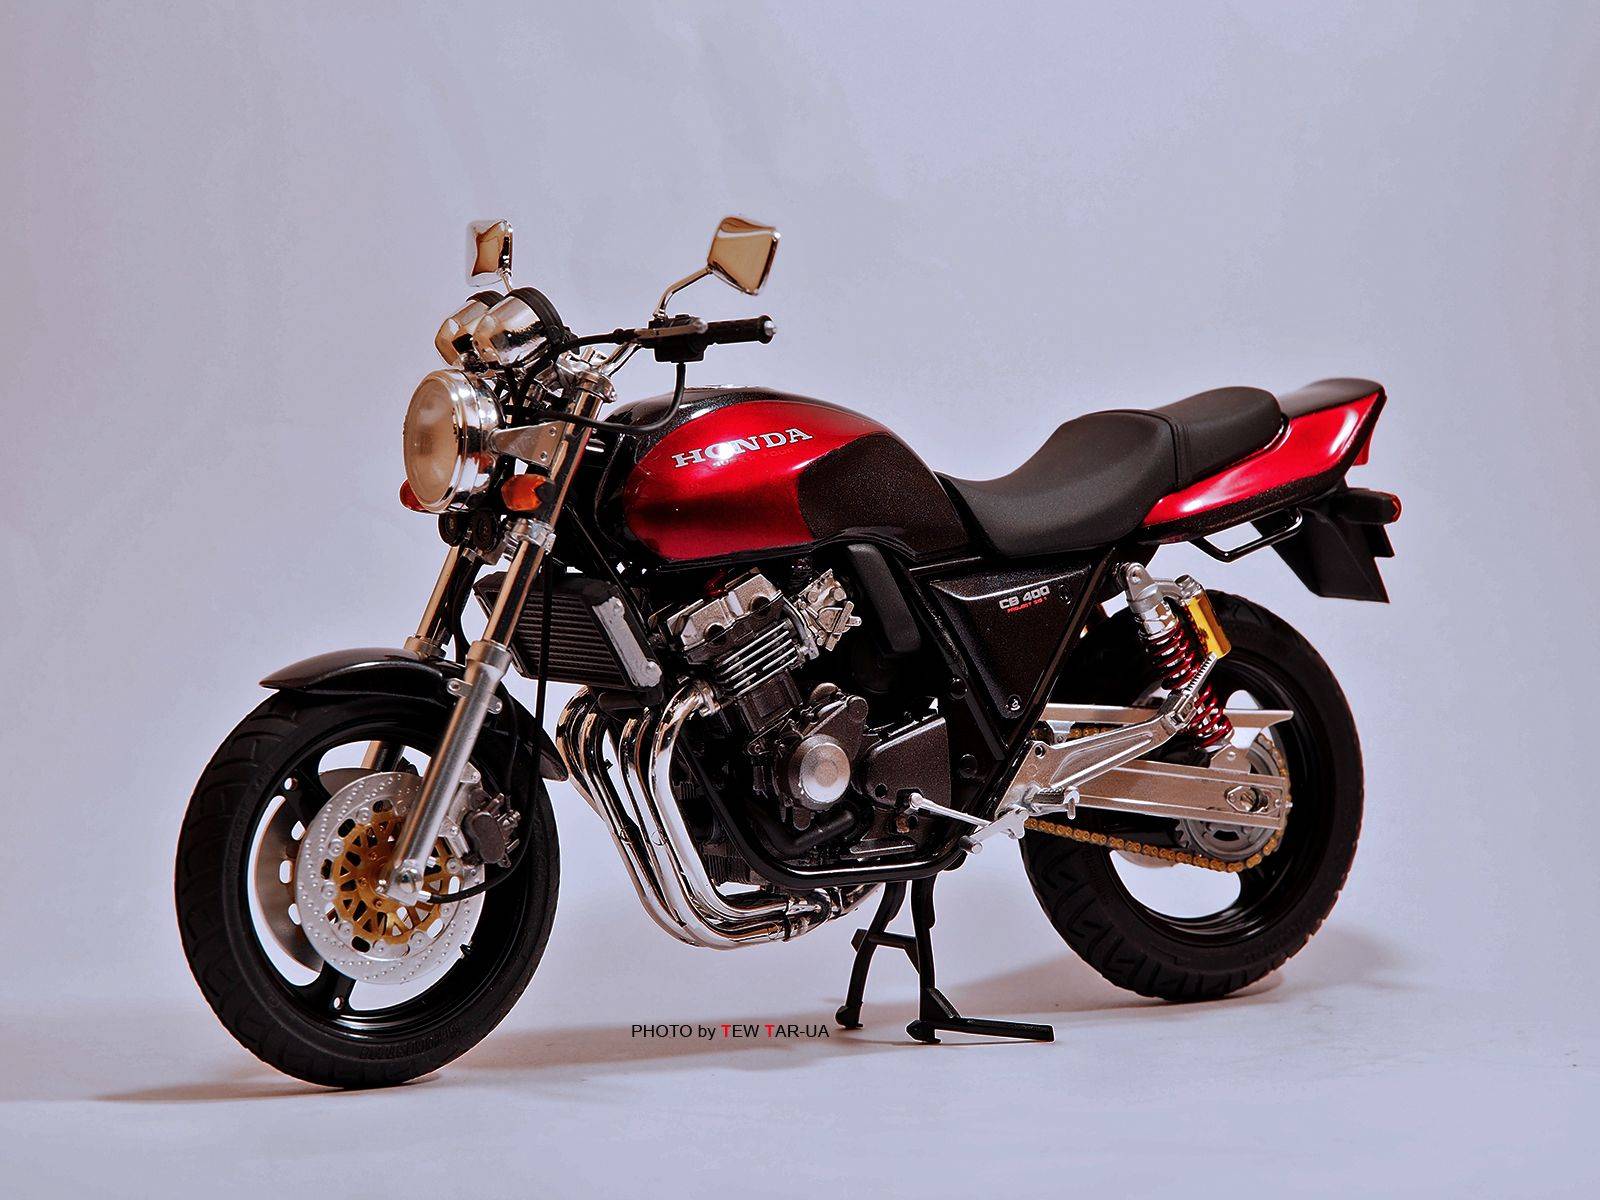 Тест-драйв honda cb400 от журнала "моторевю" — bikeswiki - энциклопедия японских мотоциклов